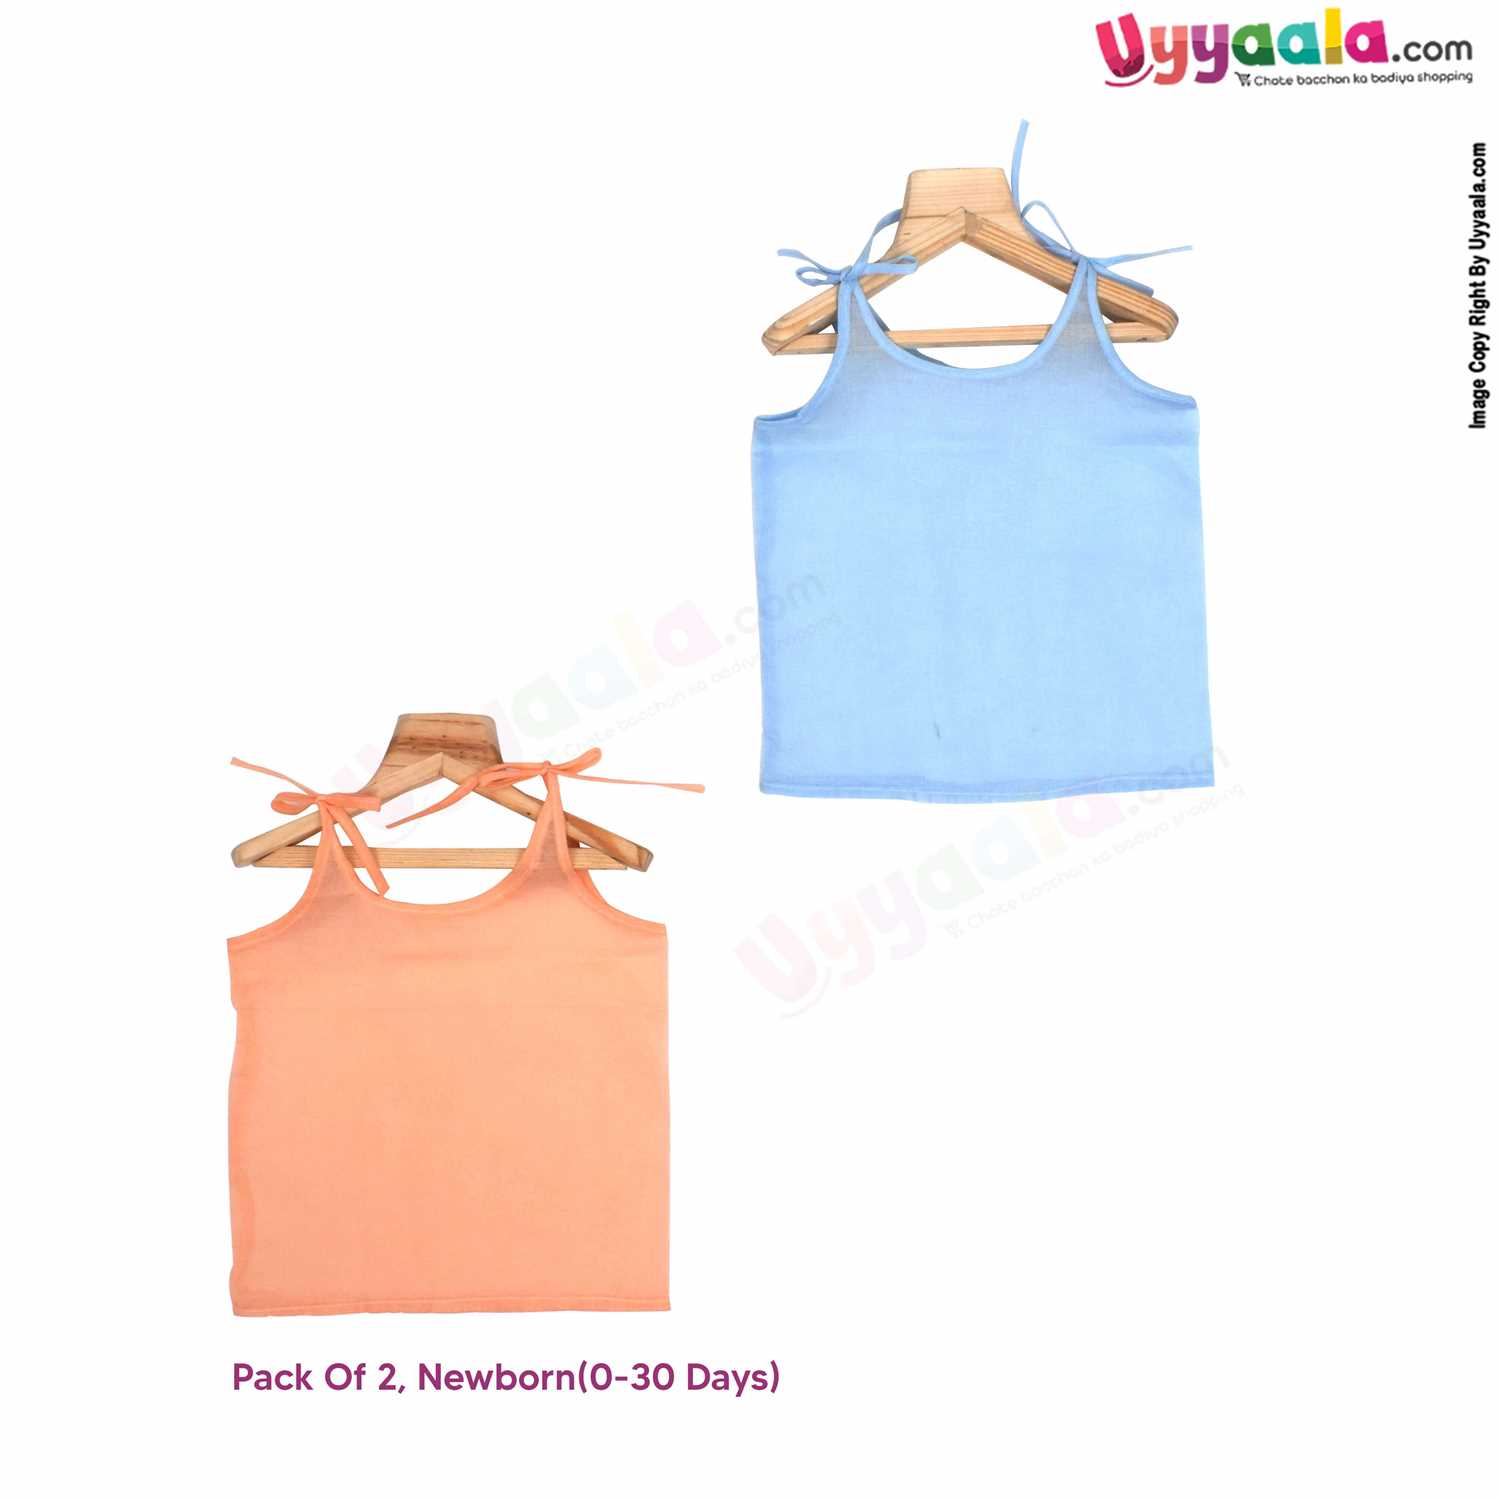 SNUG UP Sleeveless Baby Jabla Set, Top Opening Tie knot Lace Model, Premium Quality Cotton Baby Wear, Stripes Print, (0-30 Days), 2Pack - Blue & Orange